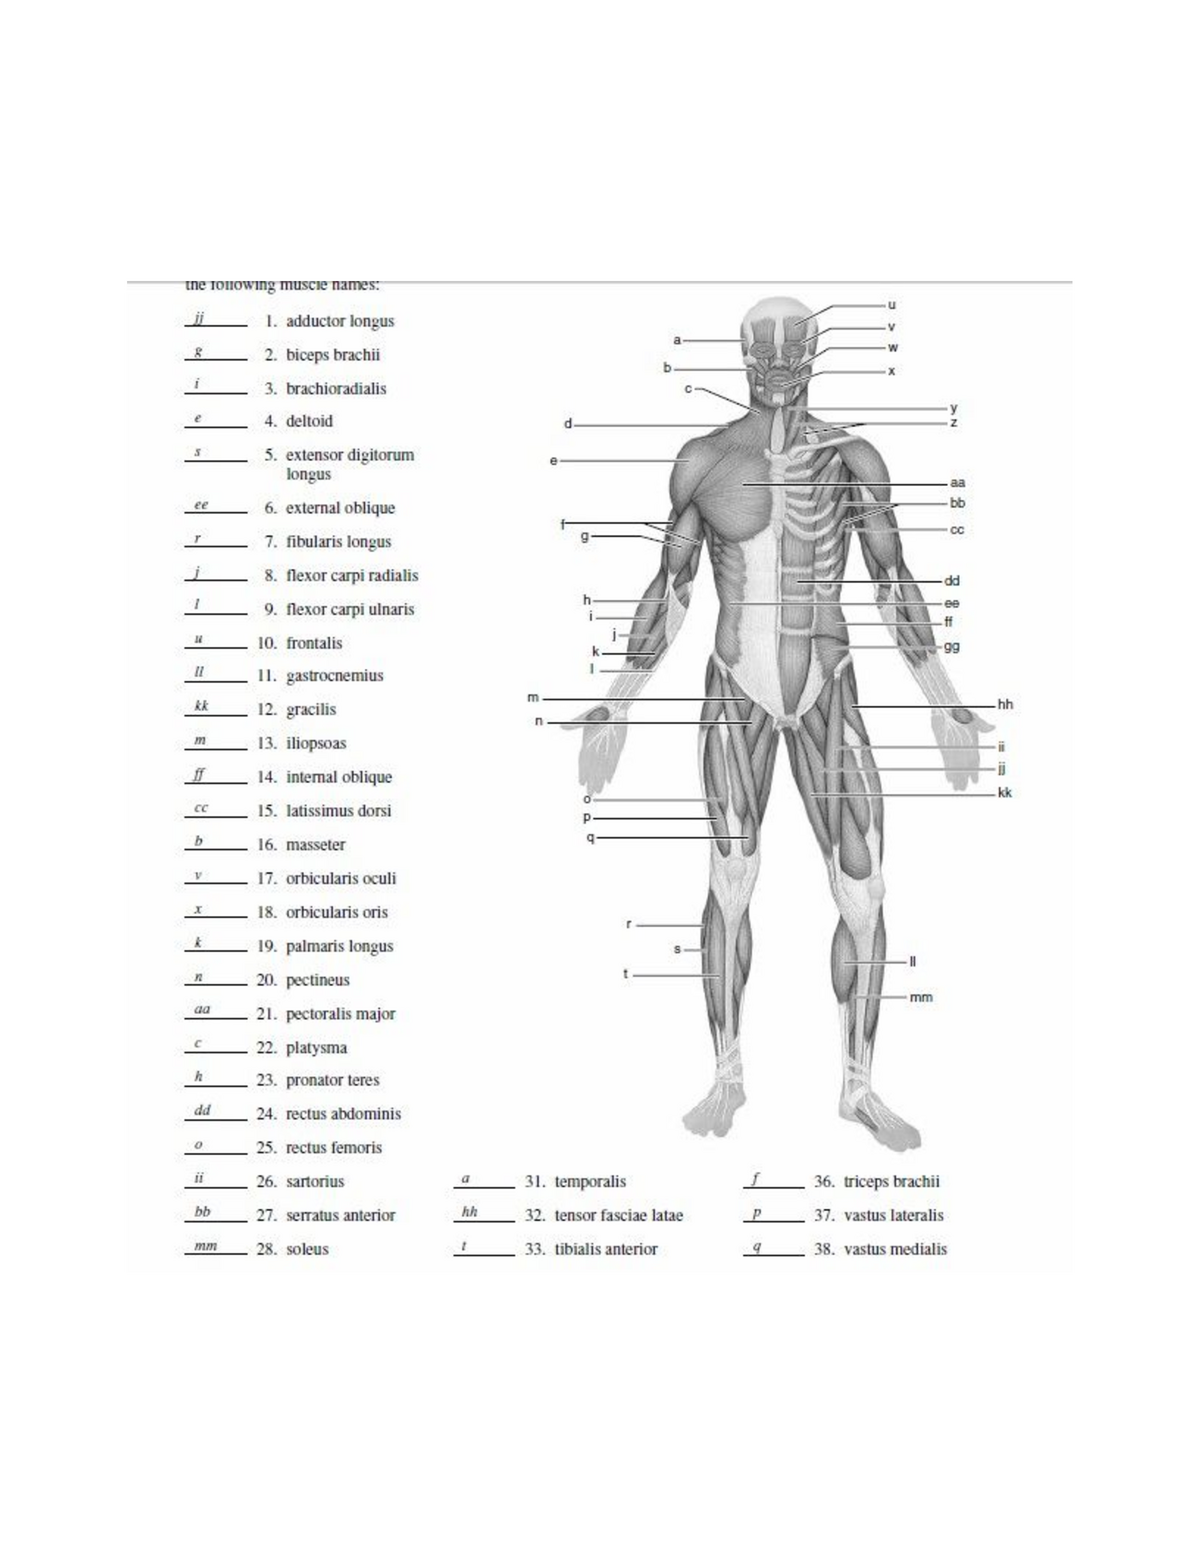 Blank Muscle Diagram To Label - Anp1106 - Uottawa